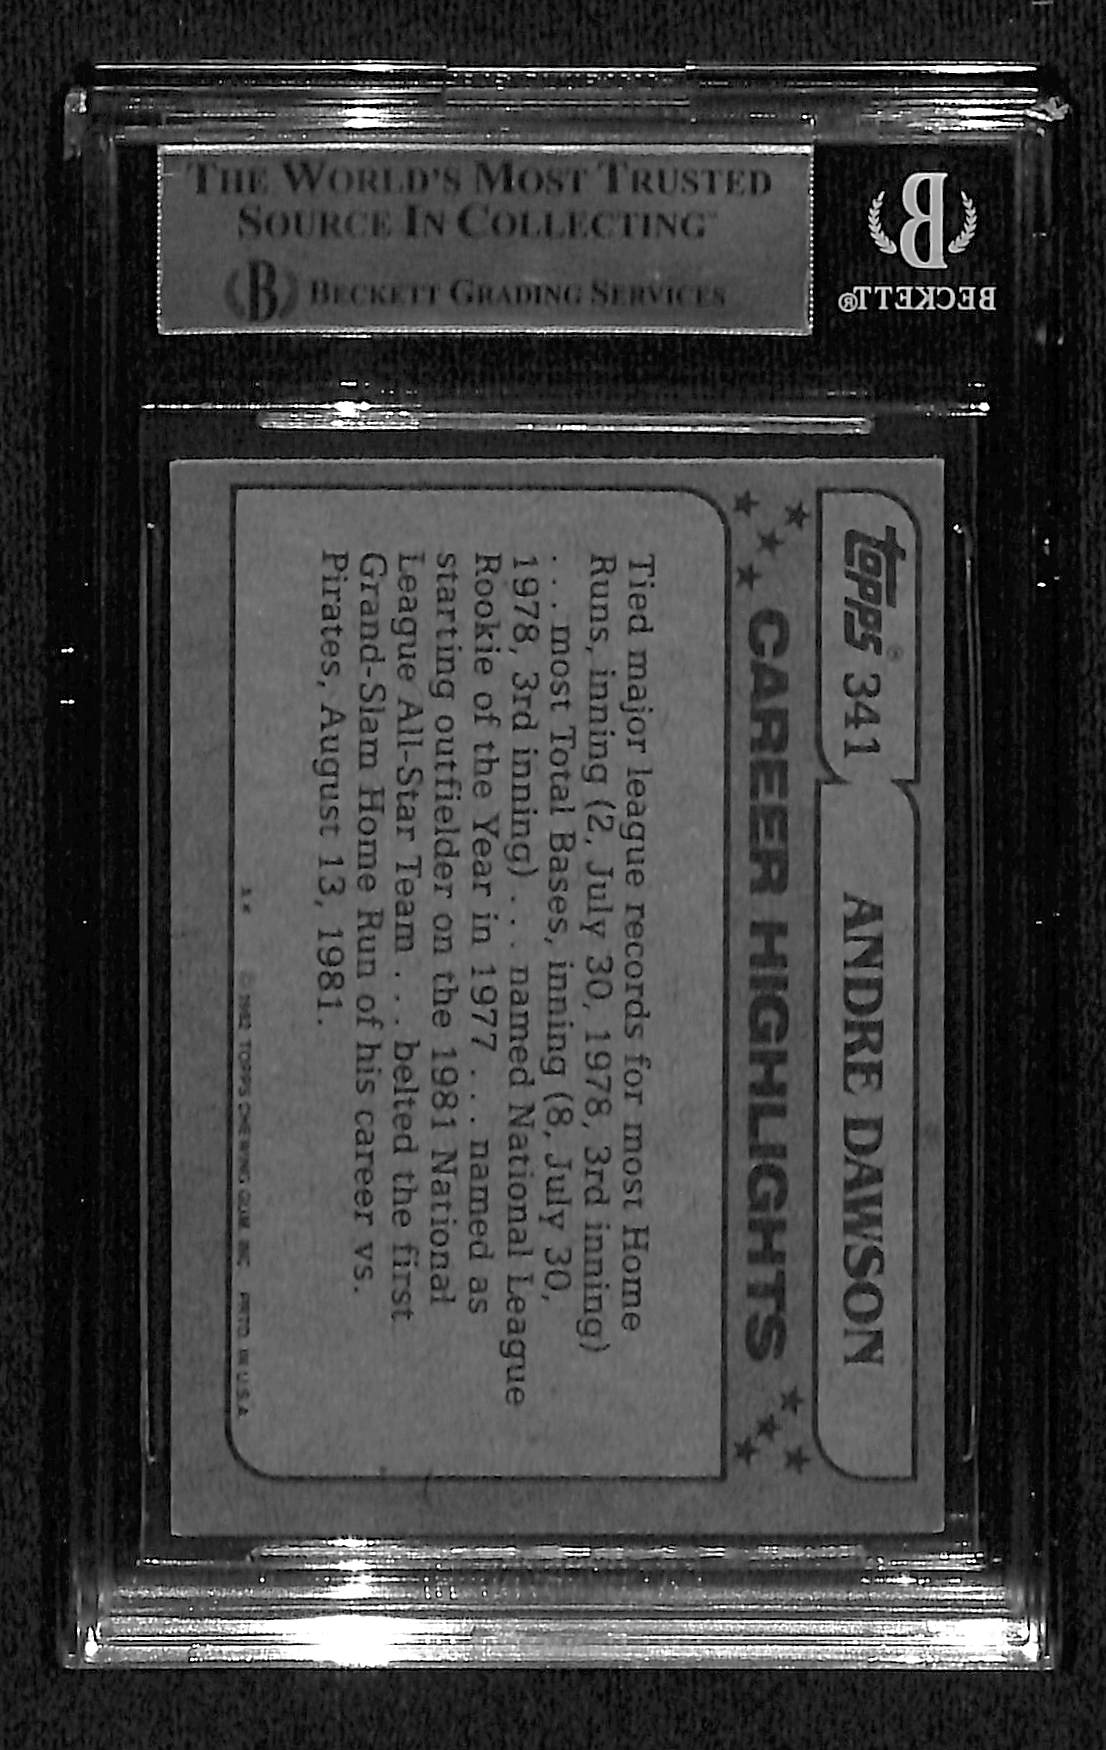 1982 TOPPS ANDRE DAWSON AUTO CARD BAS (8814)